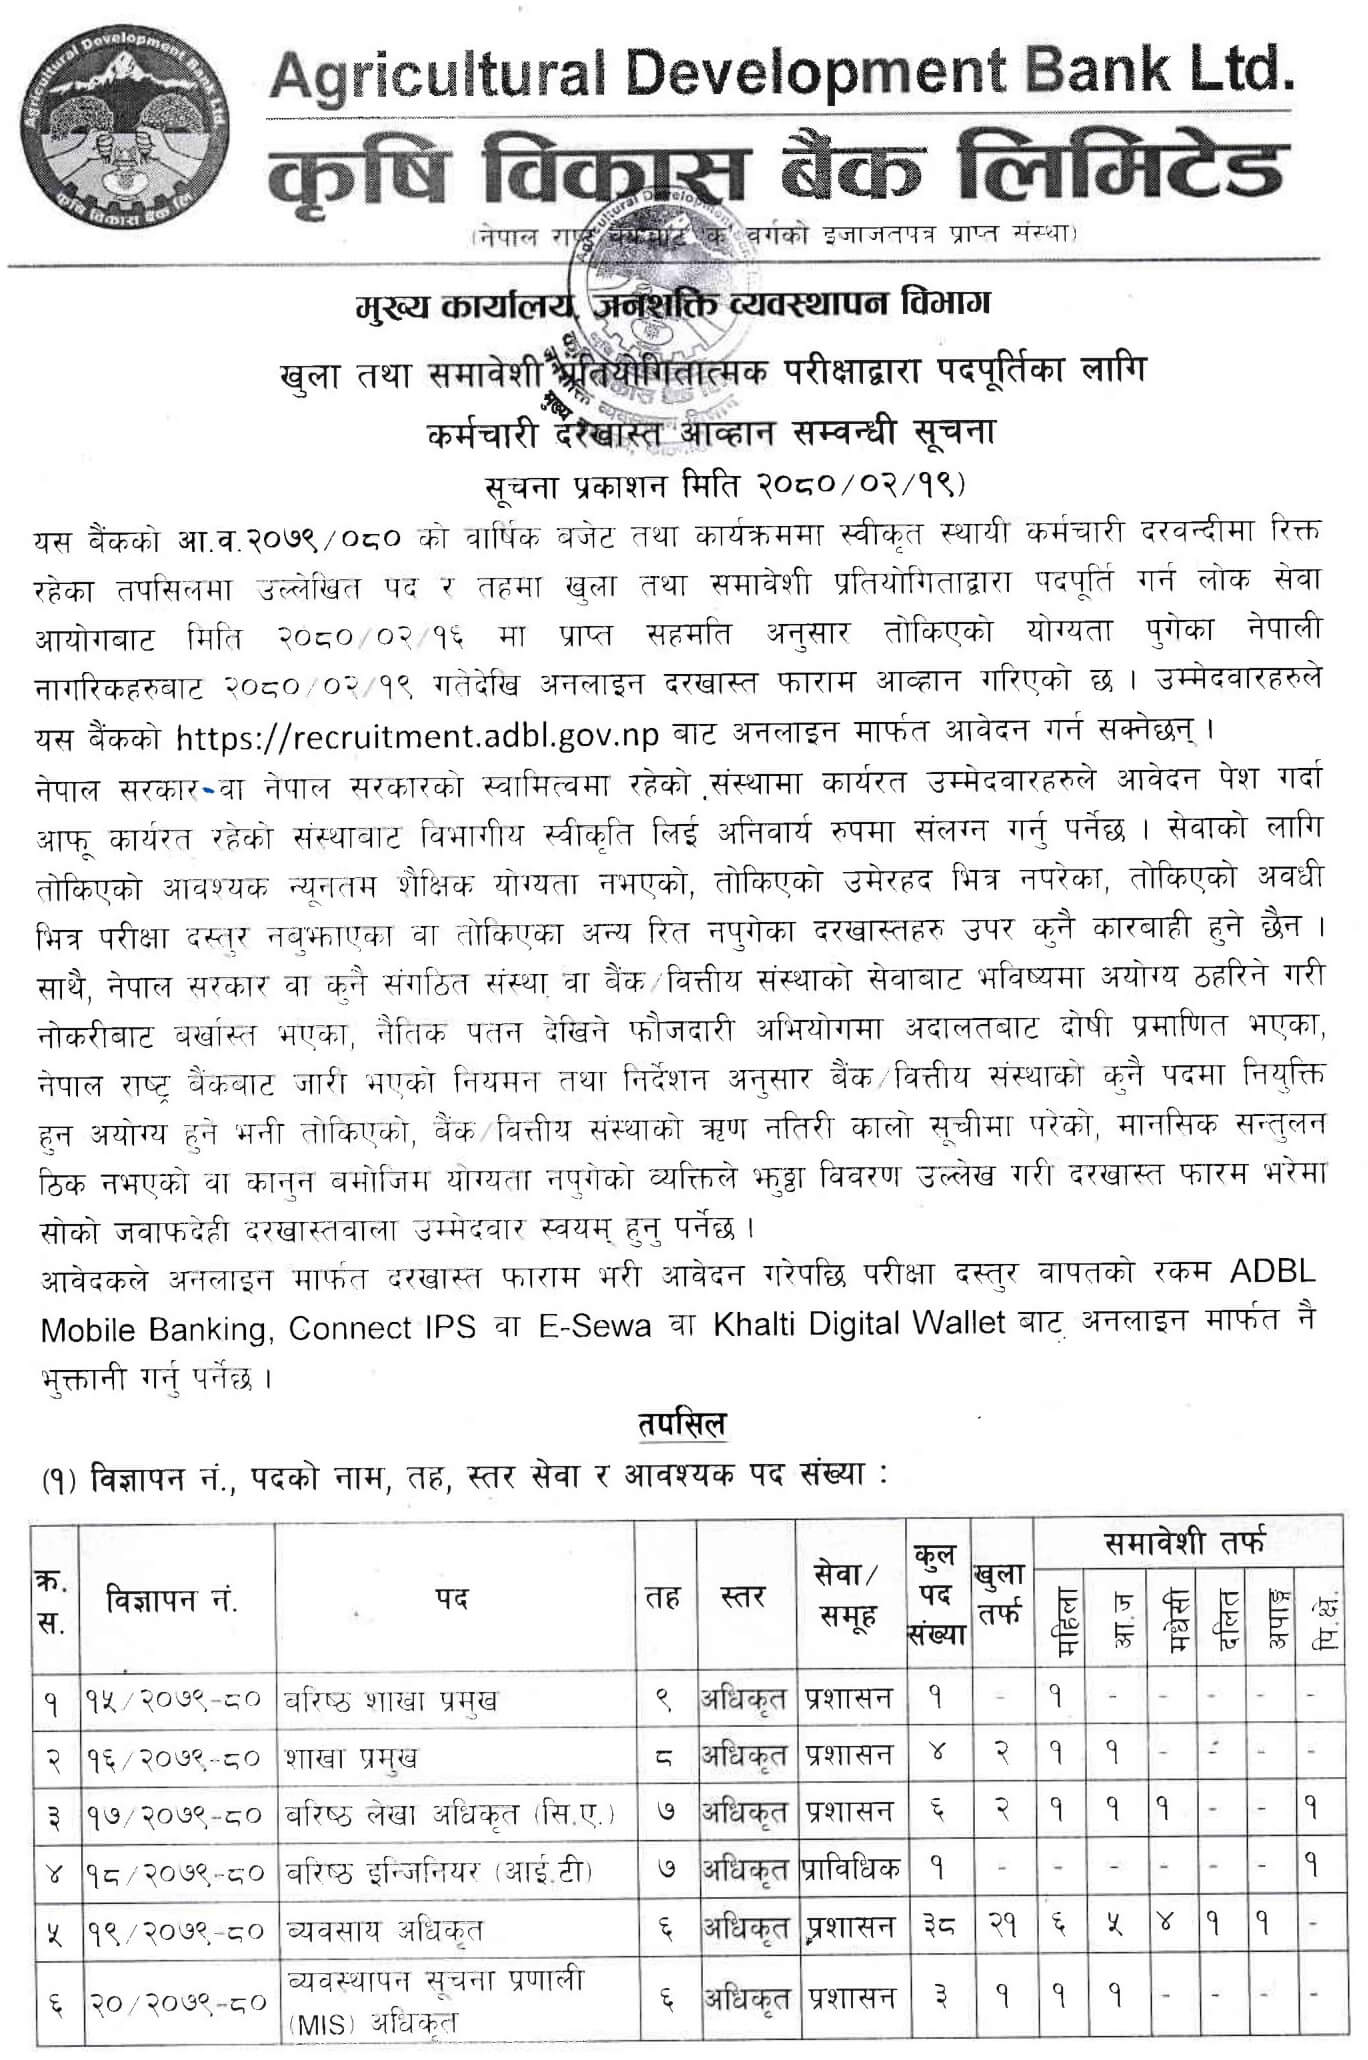 Krishi Bikas Bank Limited Know as Agricultural Development Bank (ADBL) Vacancy Announcement. ADBL Vacancy 2080. ADBL Bank Career Notice. adbl.gov.np